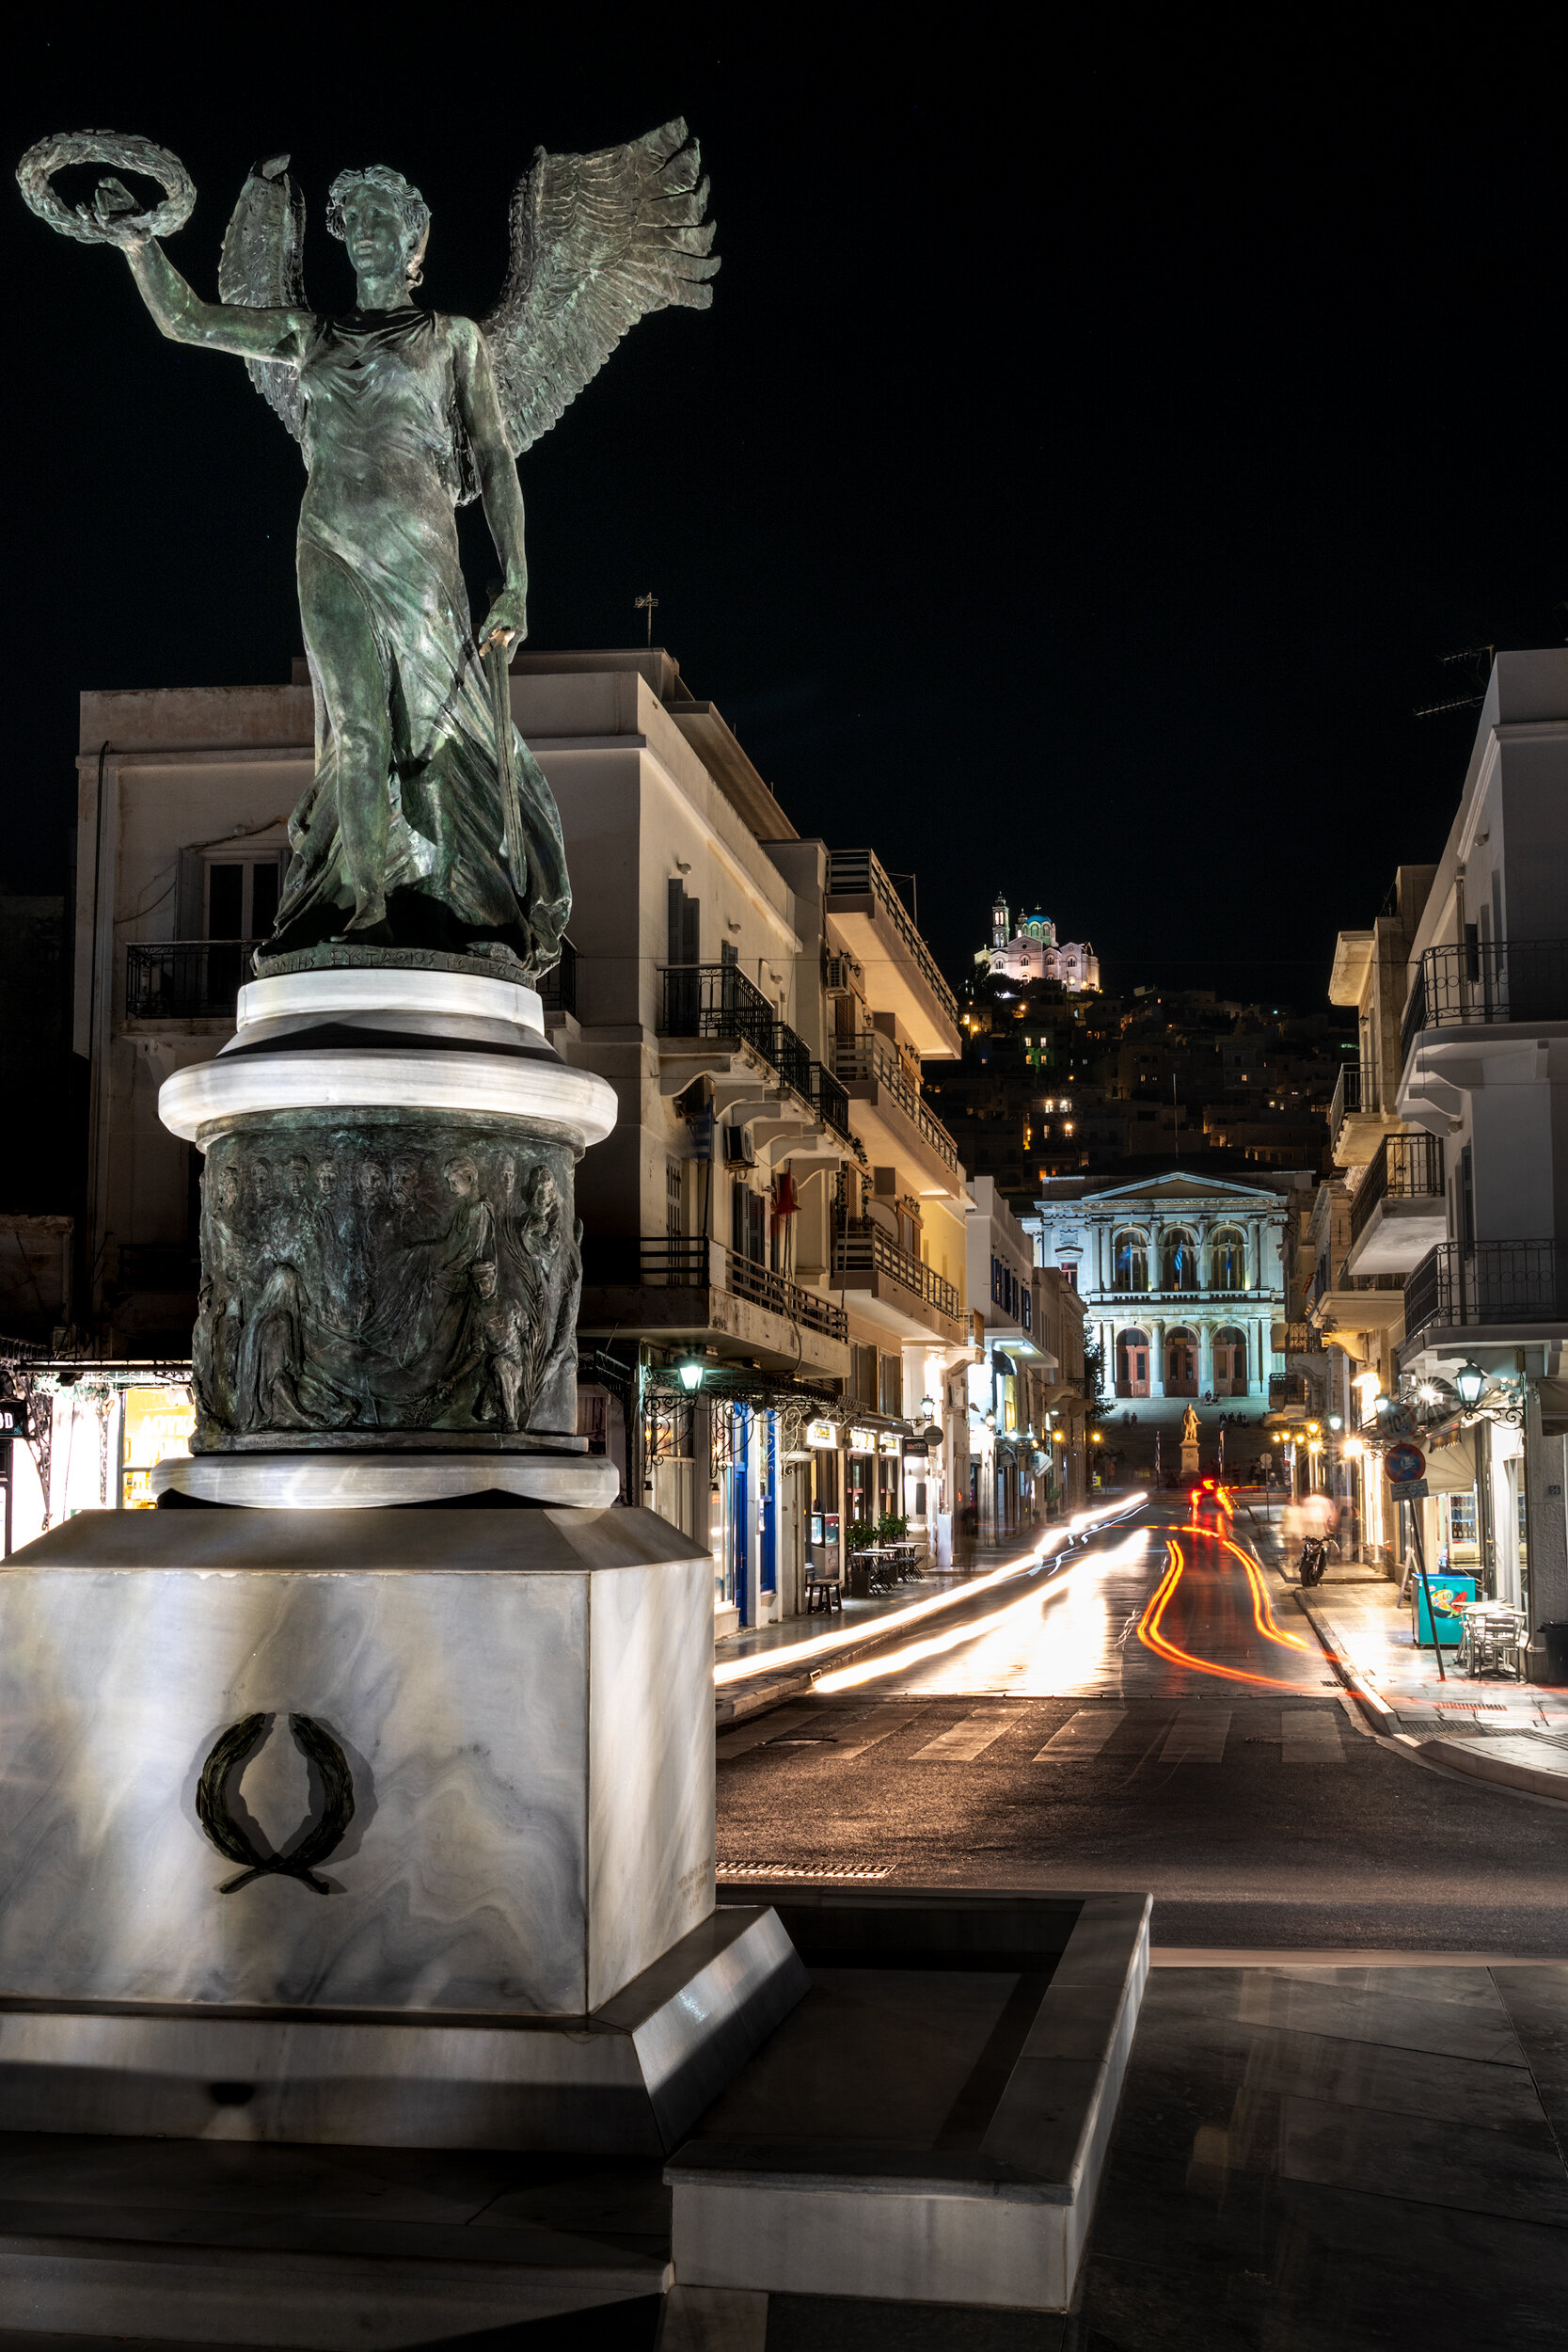 Streets-Of-Syros-Greece-Vasilis-Moustakas-Travel-Photography (3).jpg